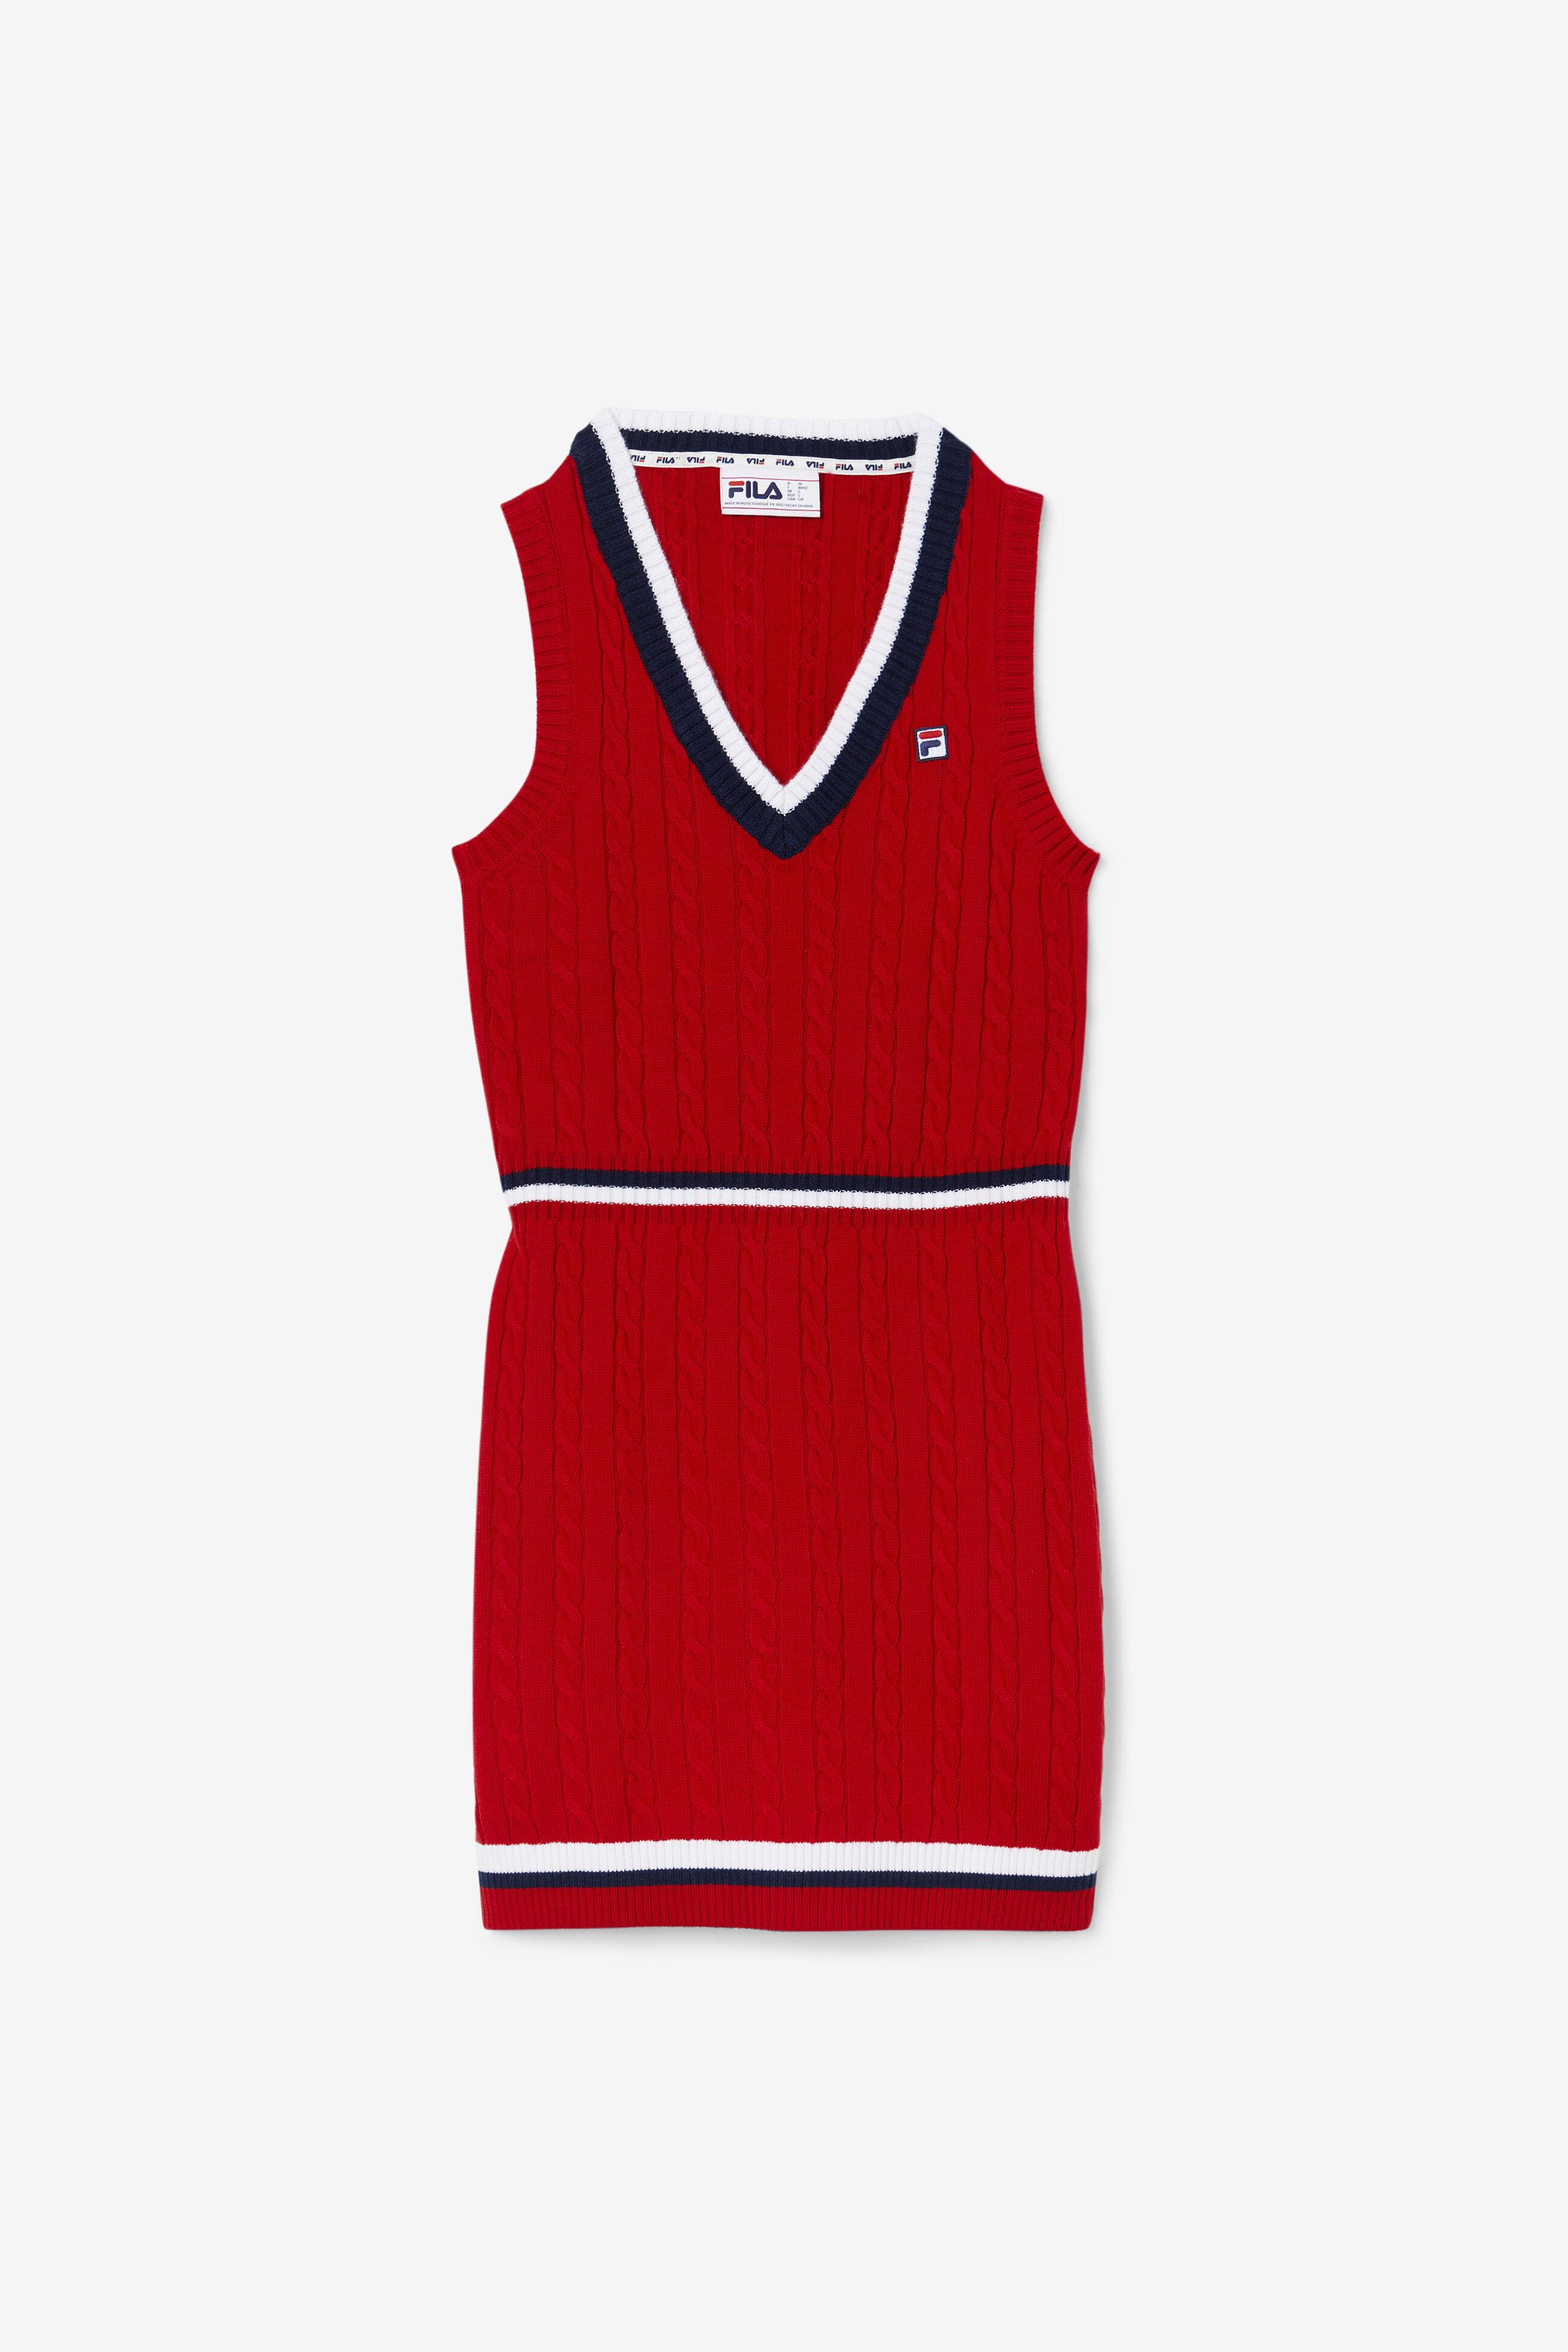 Fila Darian Sweater Knit Dress in Red | Lyst